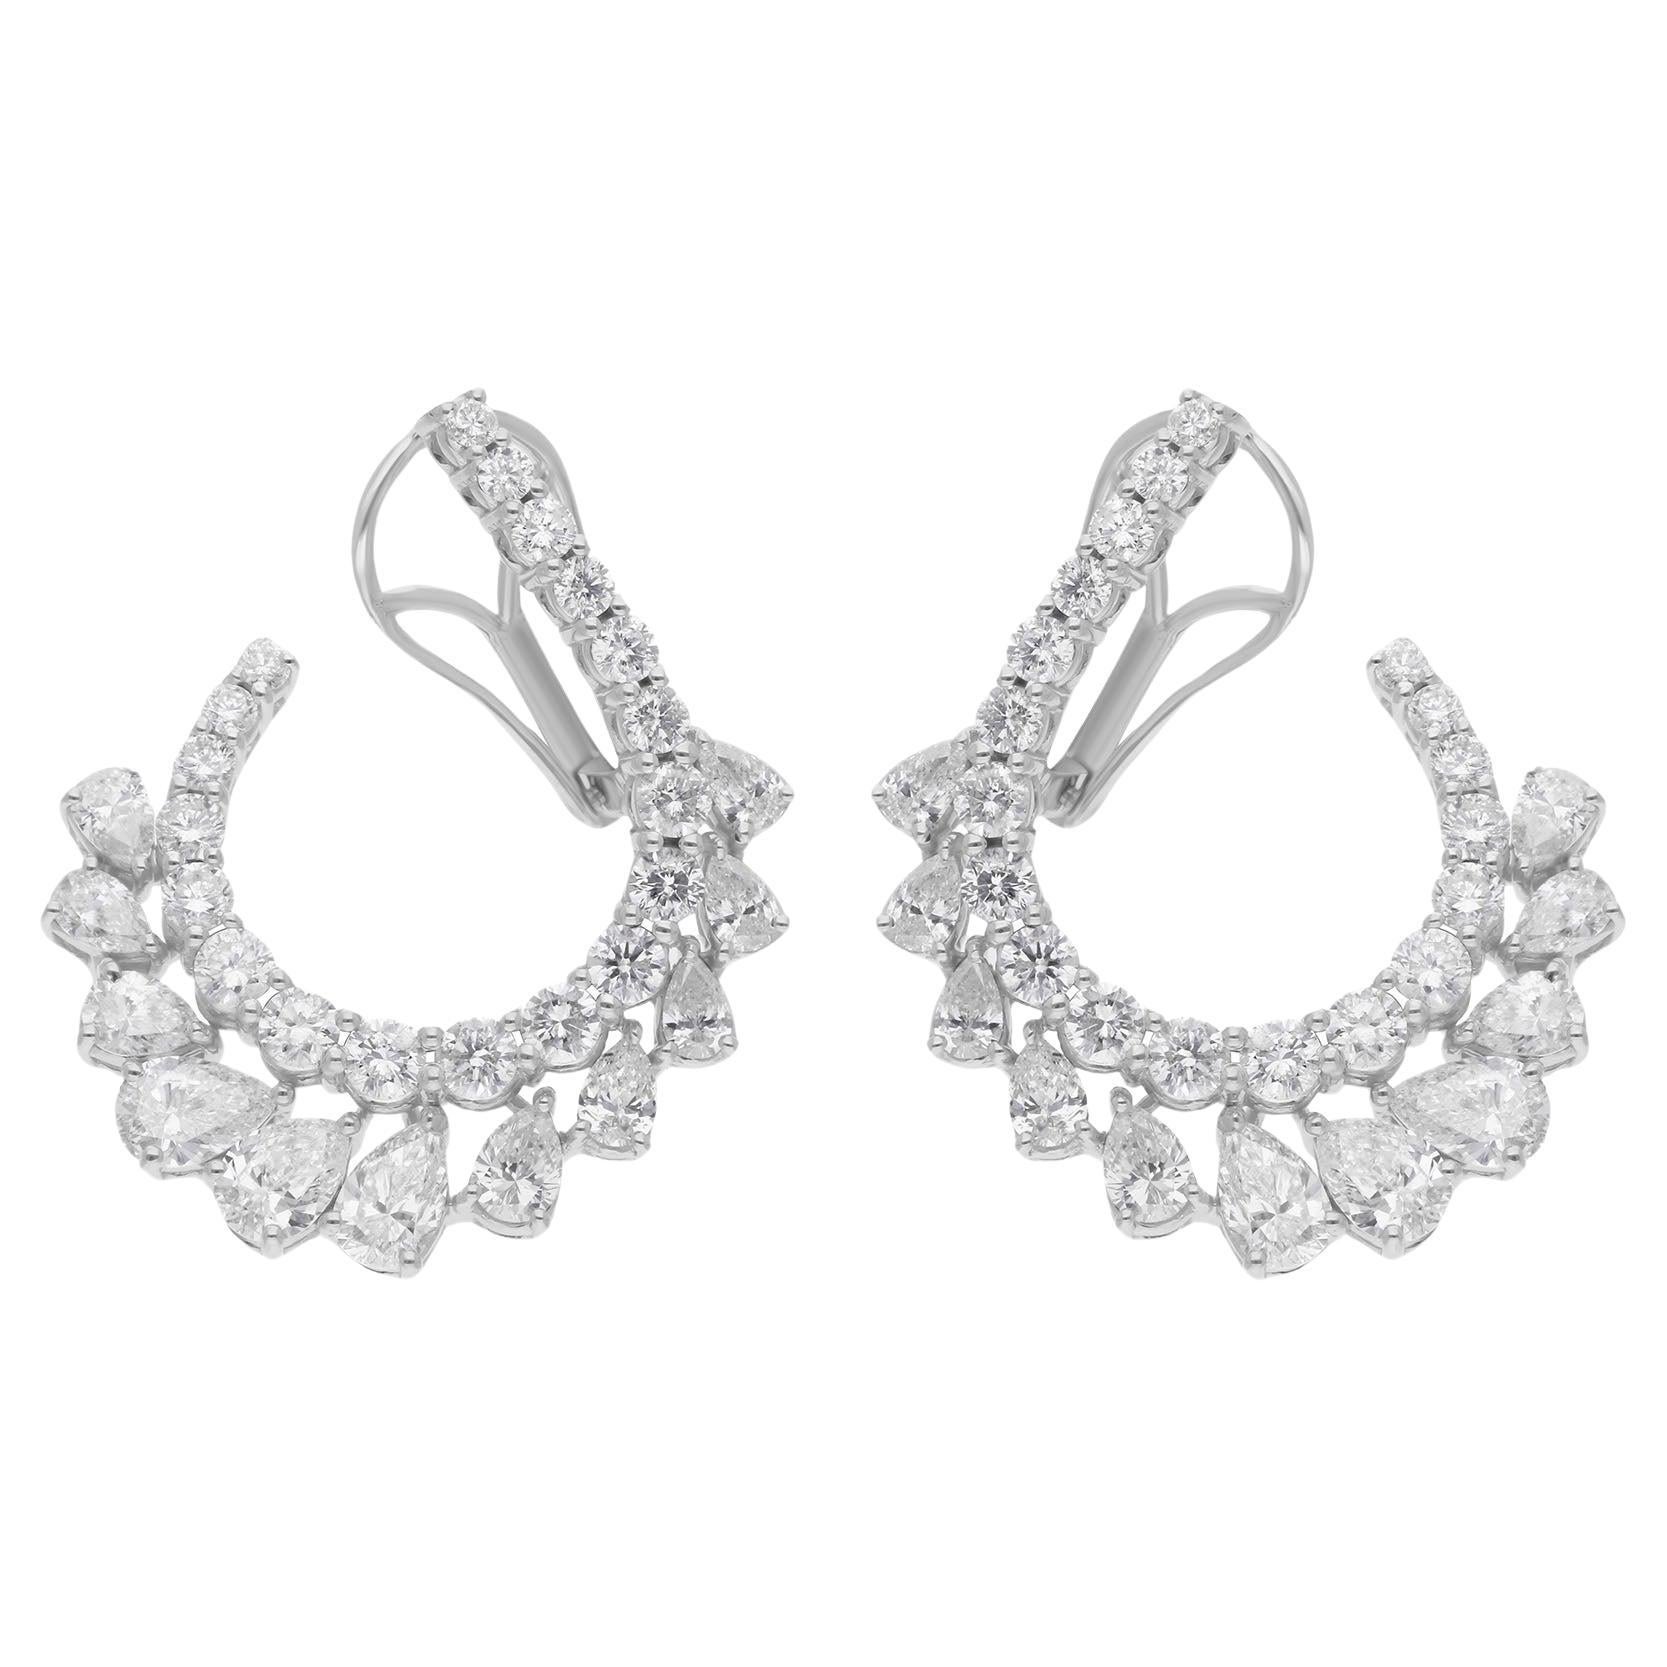 Natural 5 Ct. Pear Round Diamond Earrings 14 Karat White Gold Handmade Jewelry